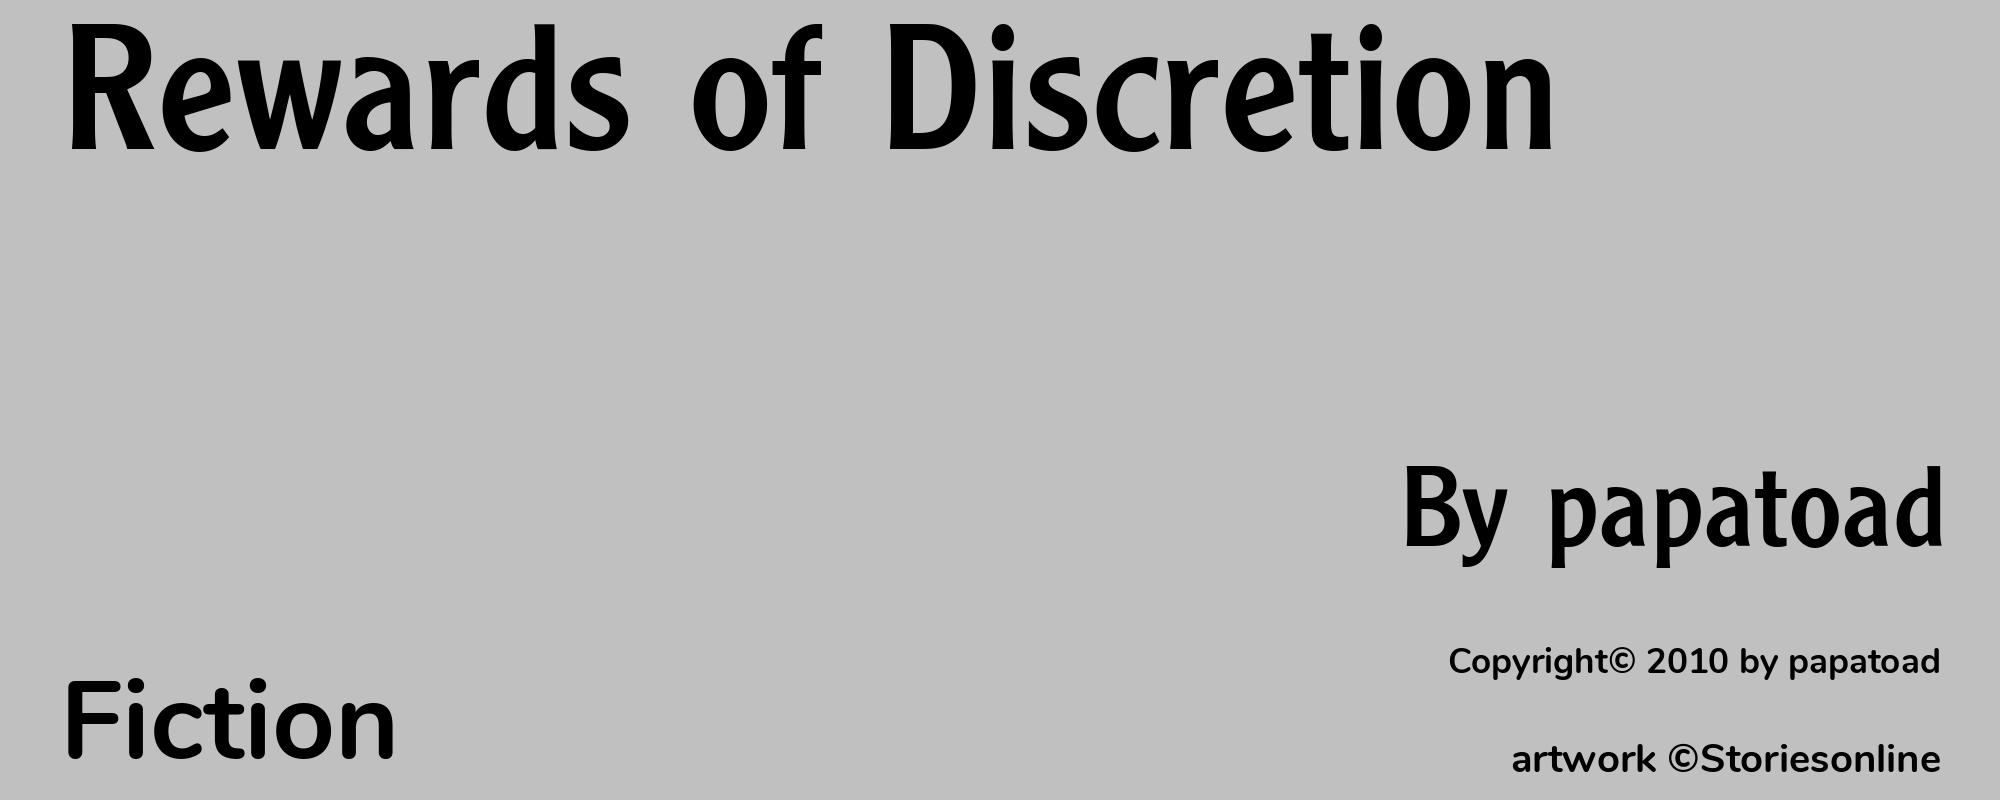 Rewards of Discretion - Cover